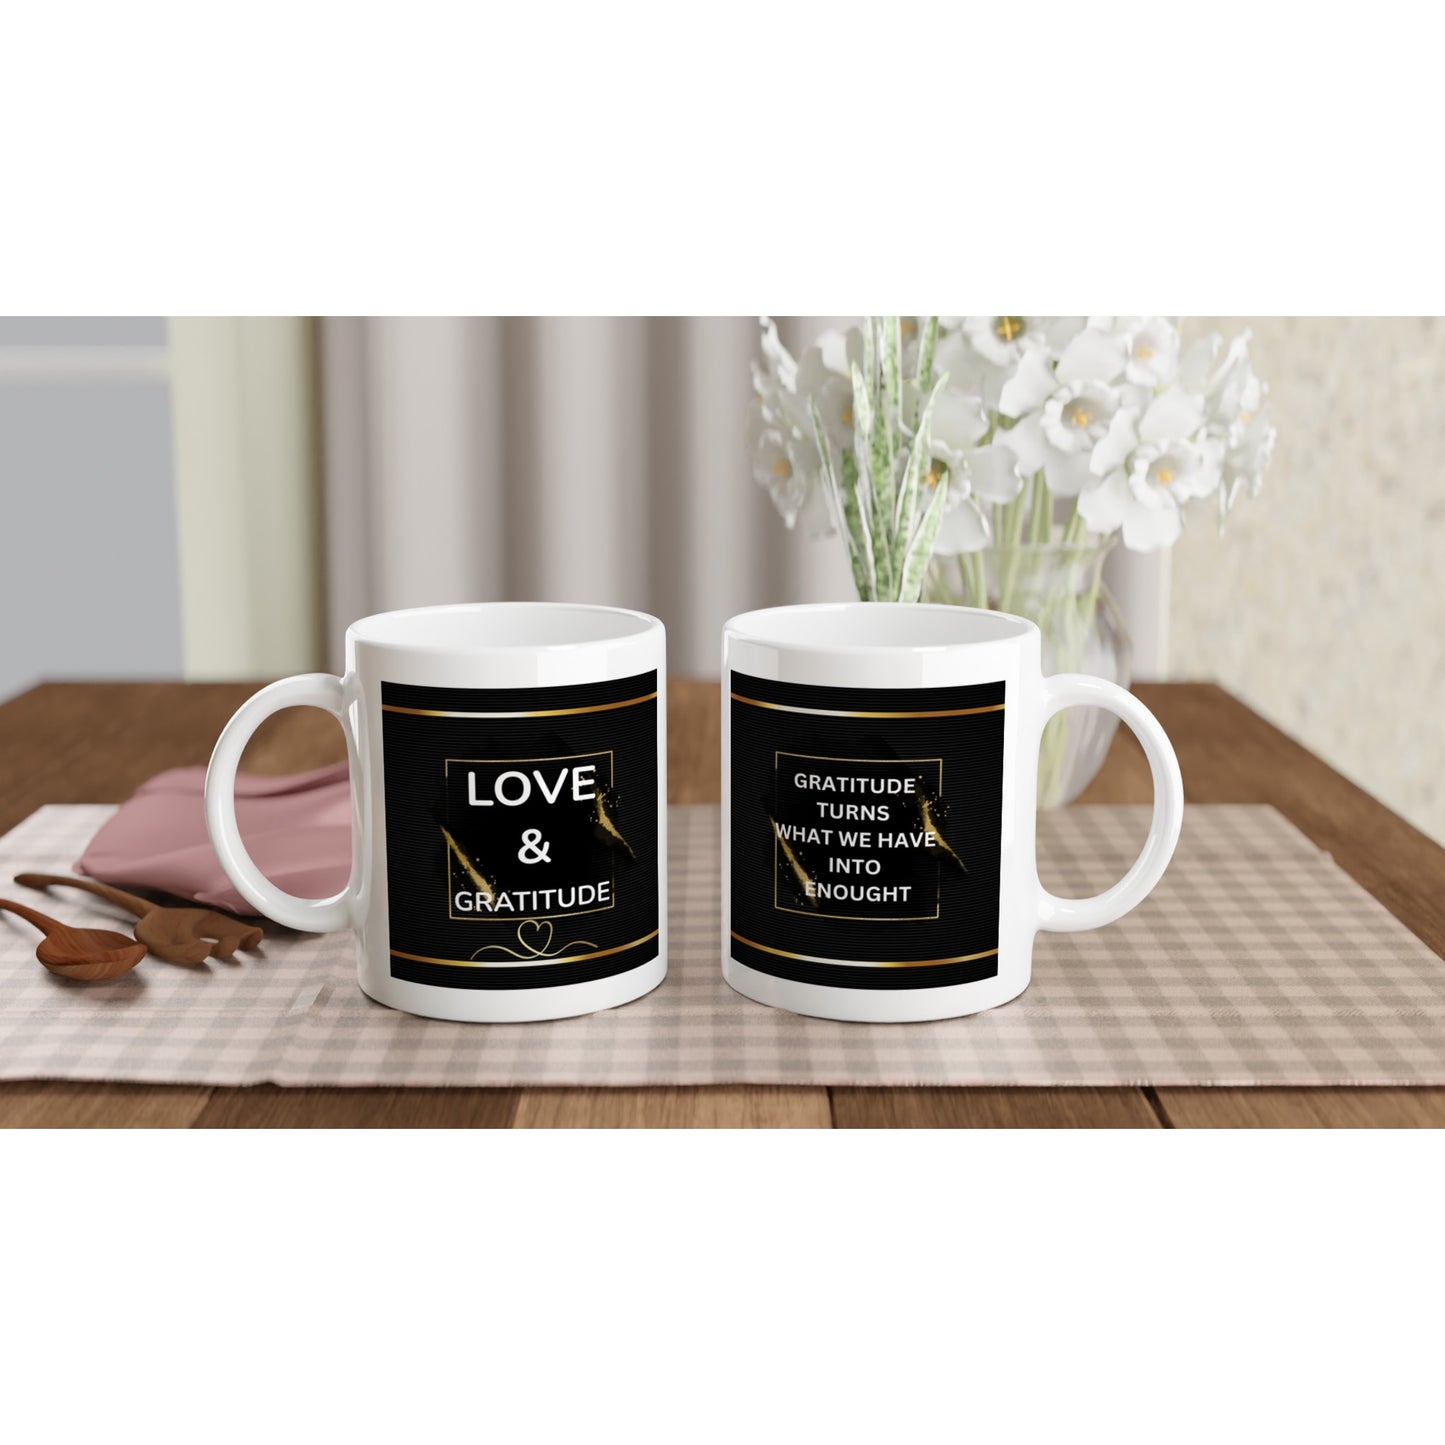 Love & Gratitude Ceramic Mug - Inspirational Powerful Words